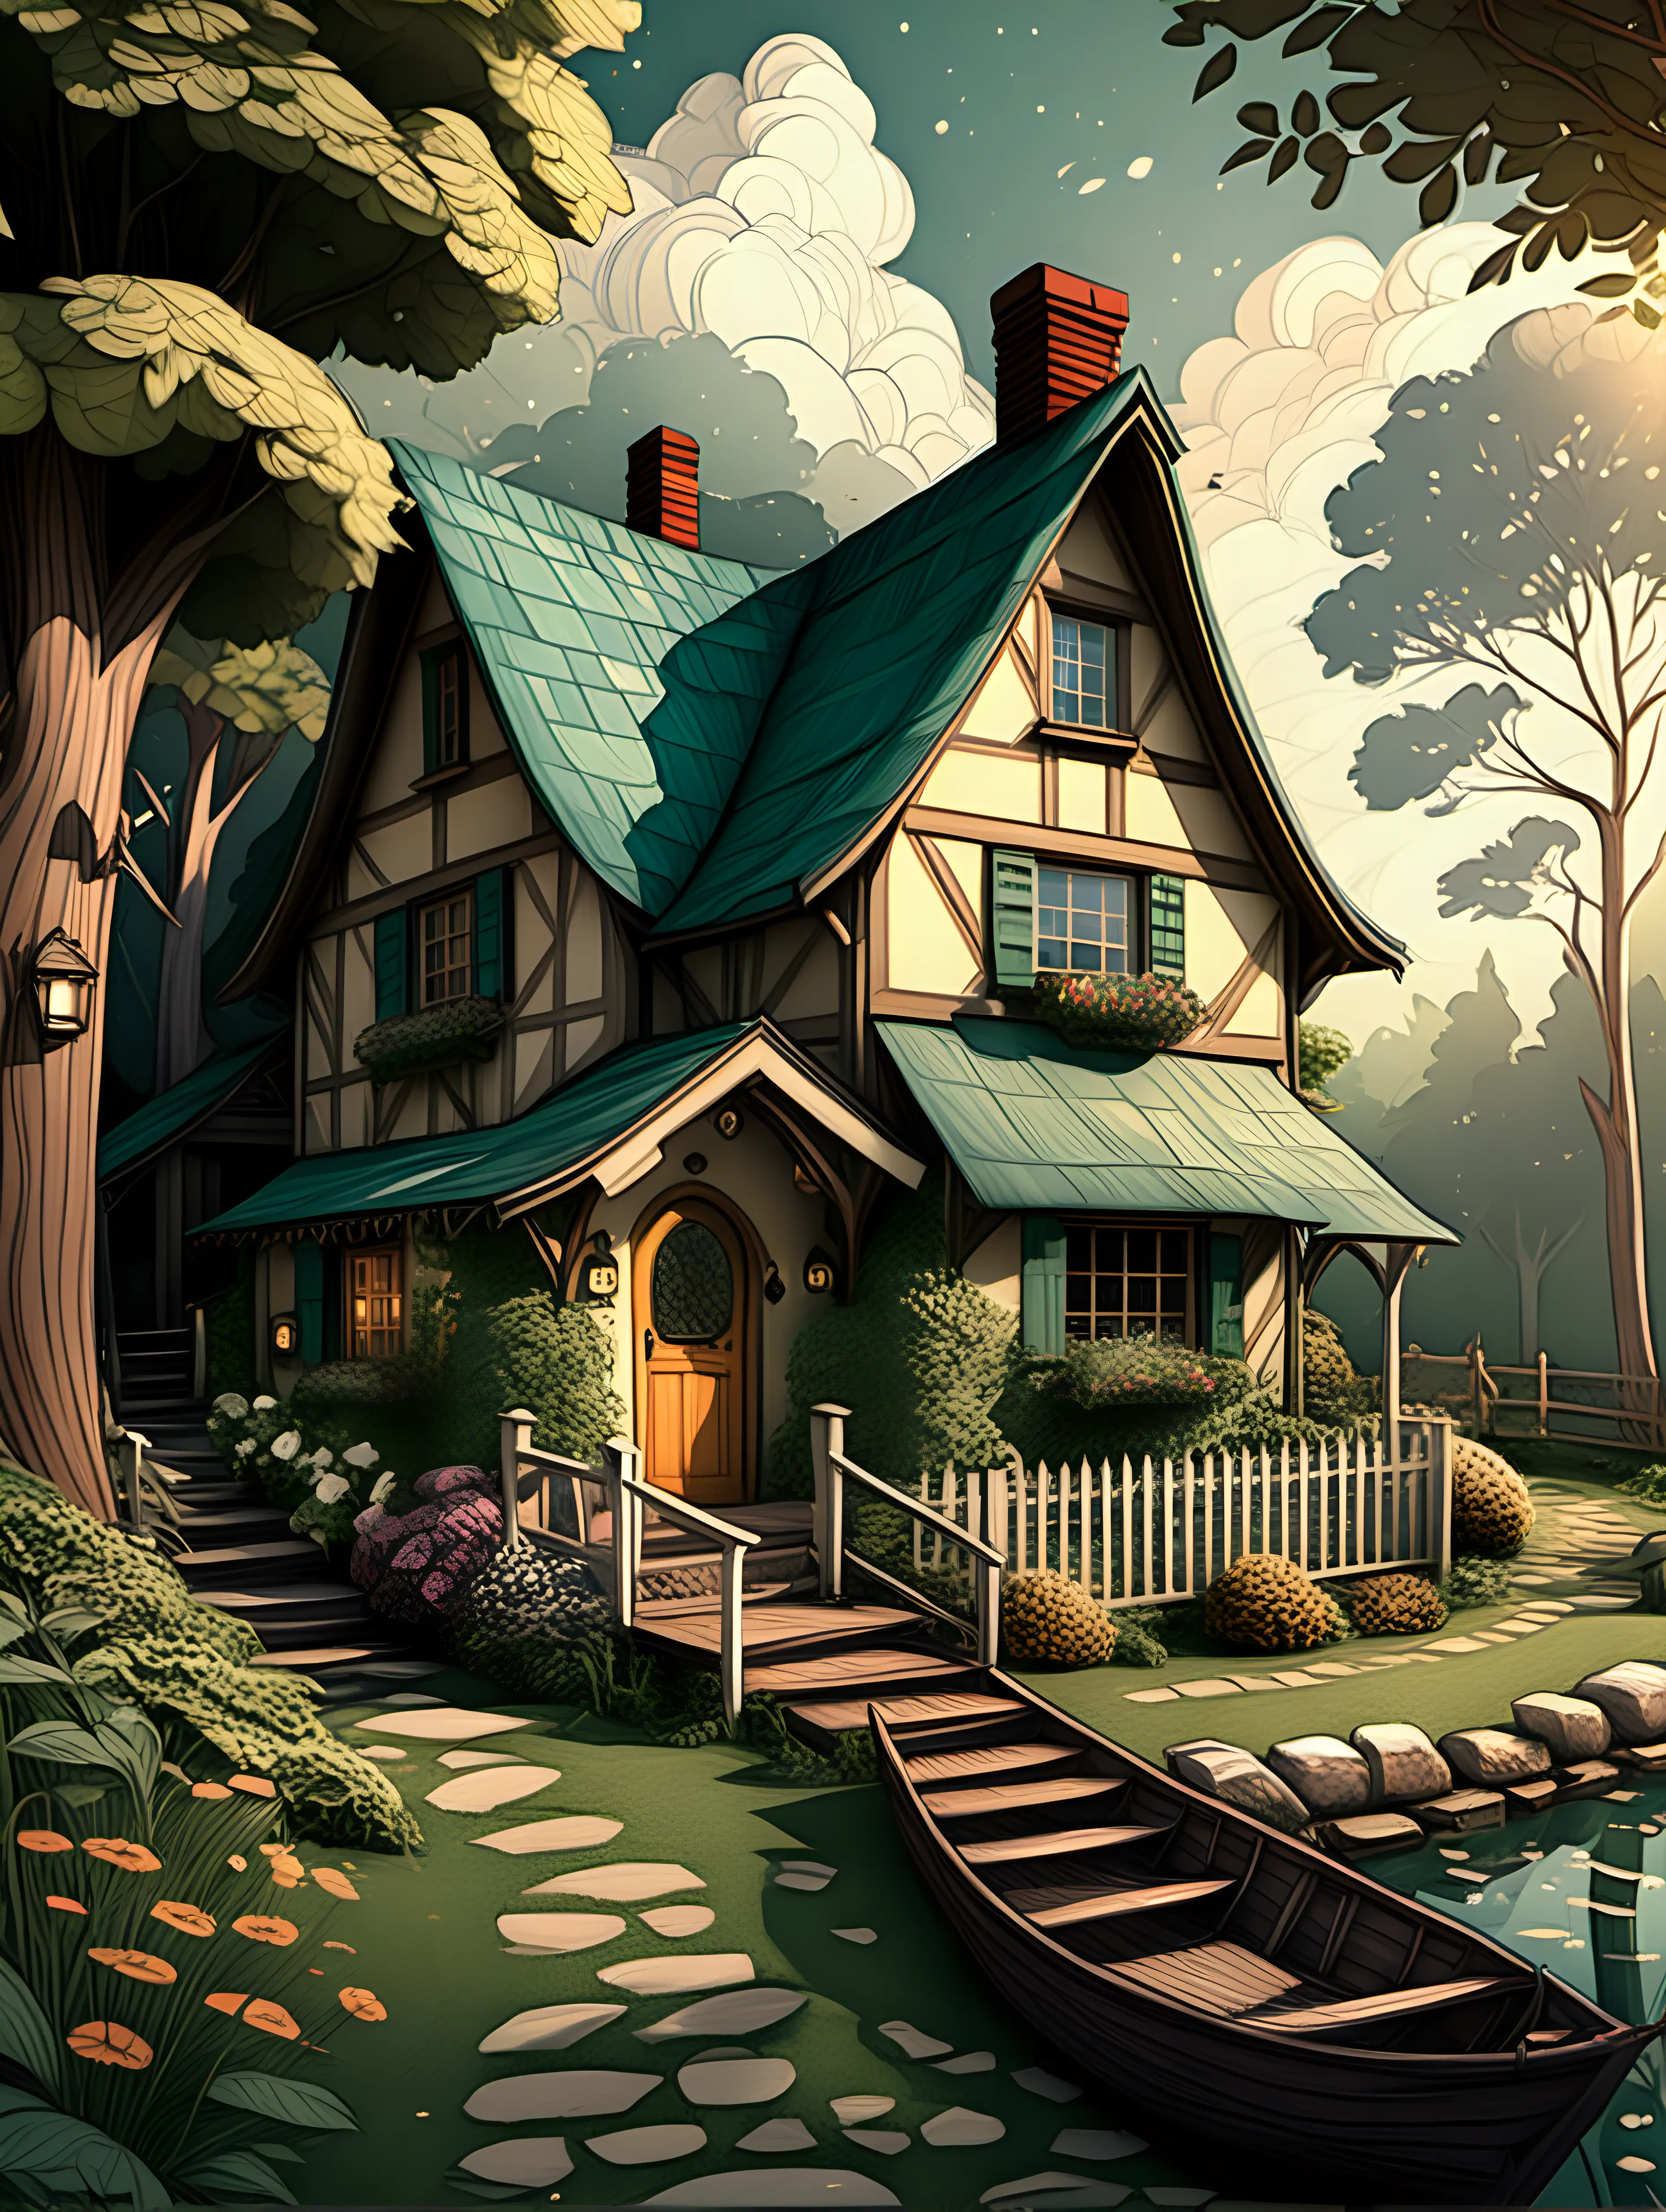 Enchanting Storybook Cottage Illustration with Intricate Details